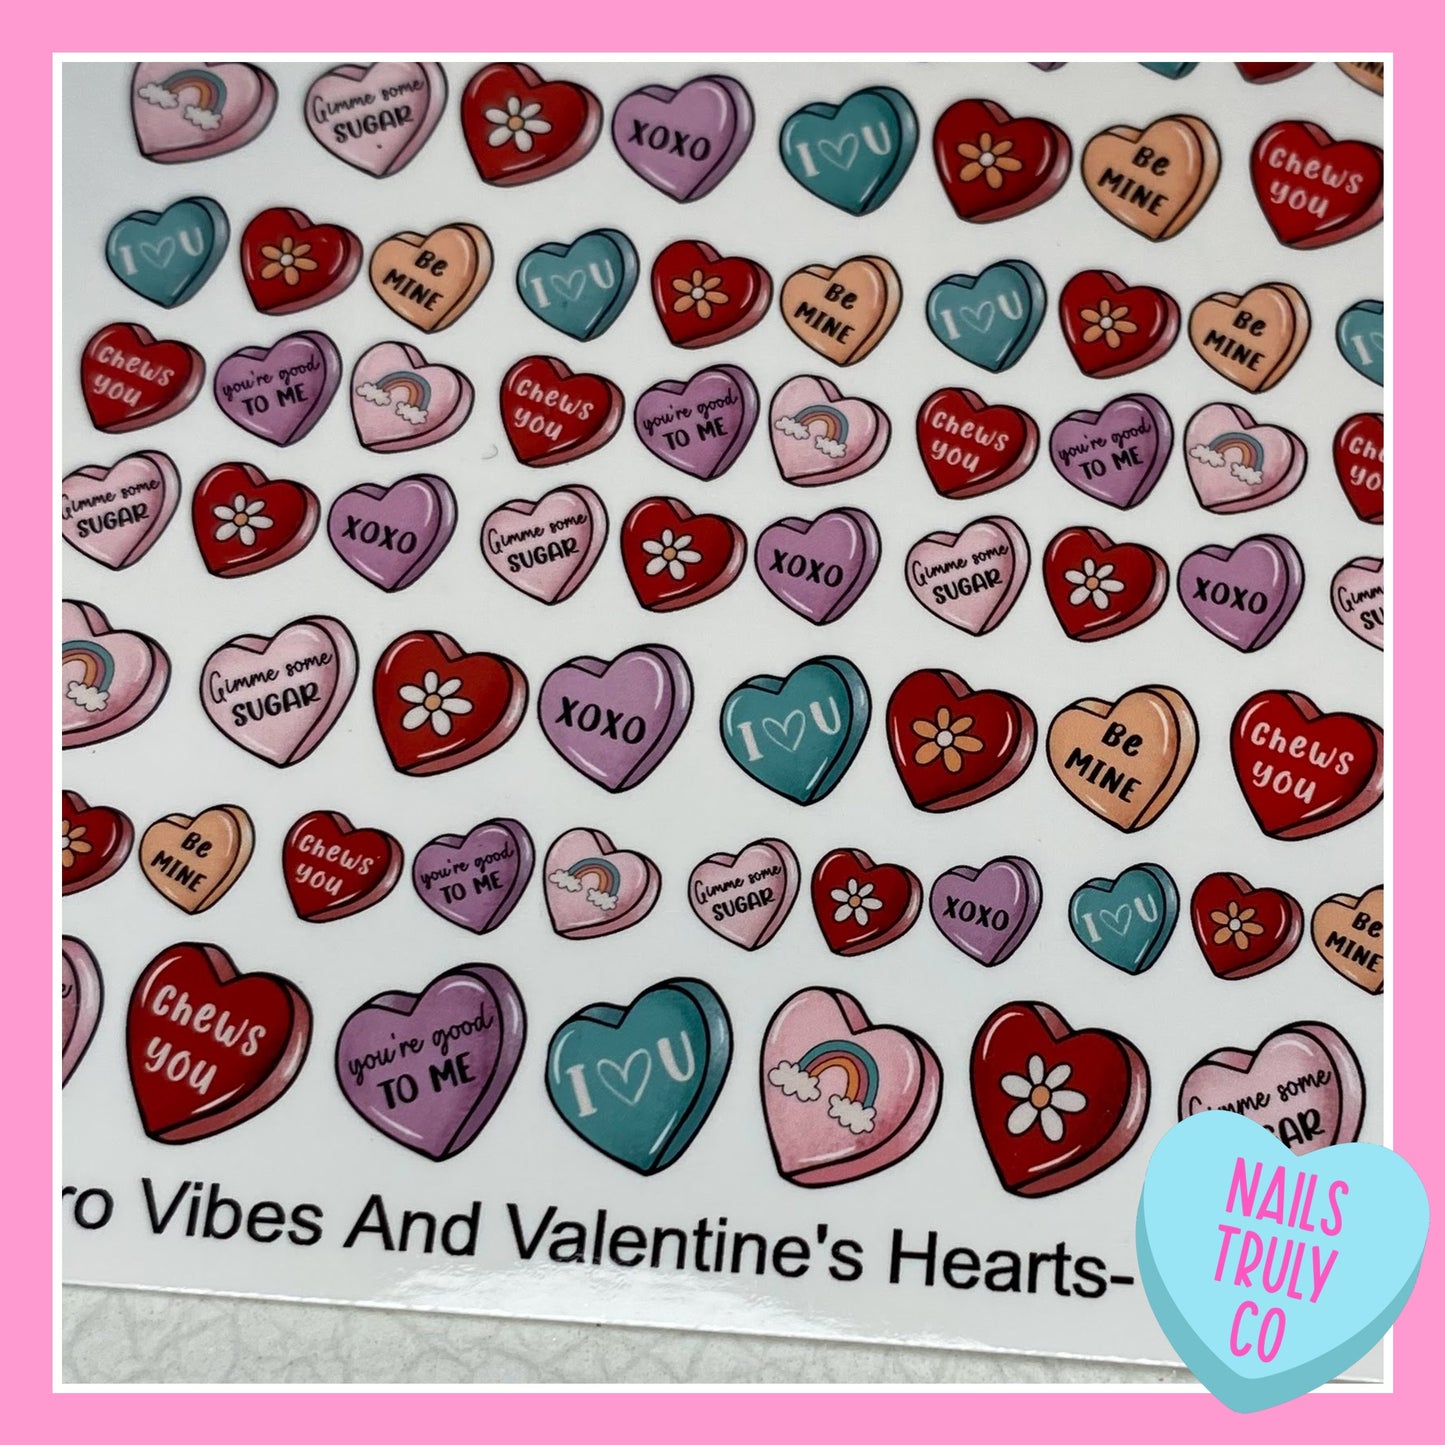 Conversation Hearts- Retro Vibes And Valentine's Hearts